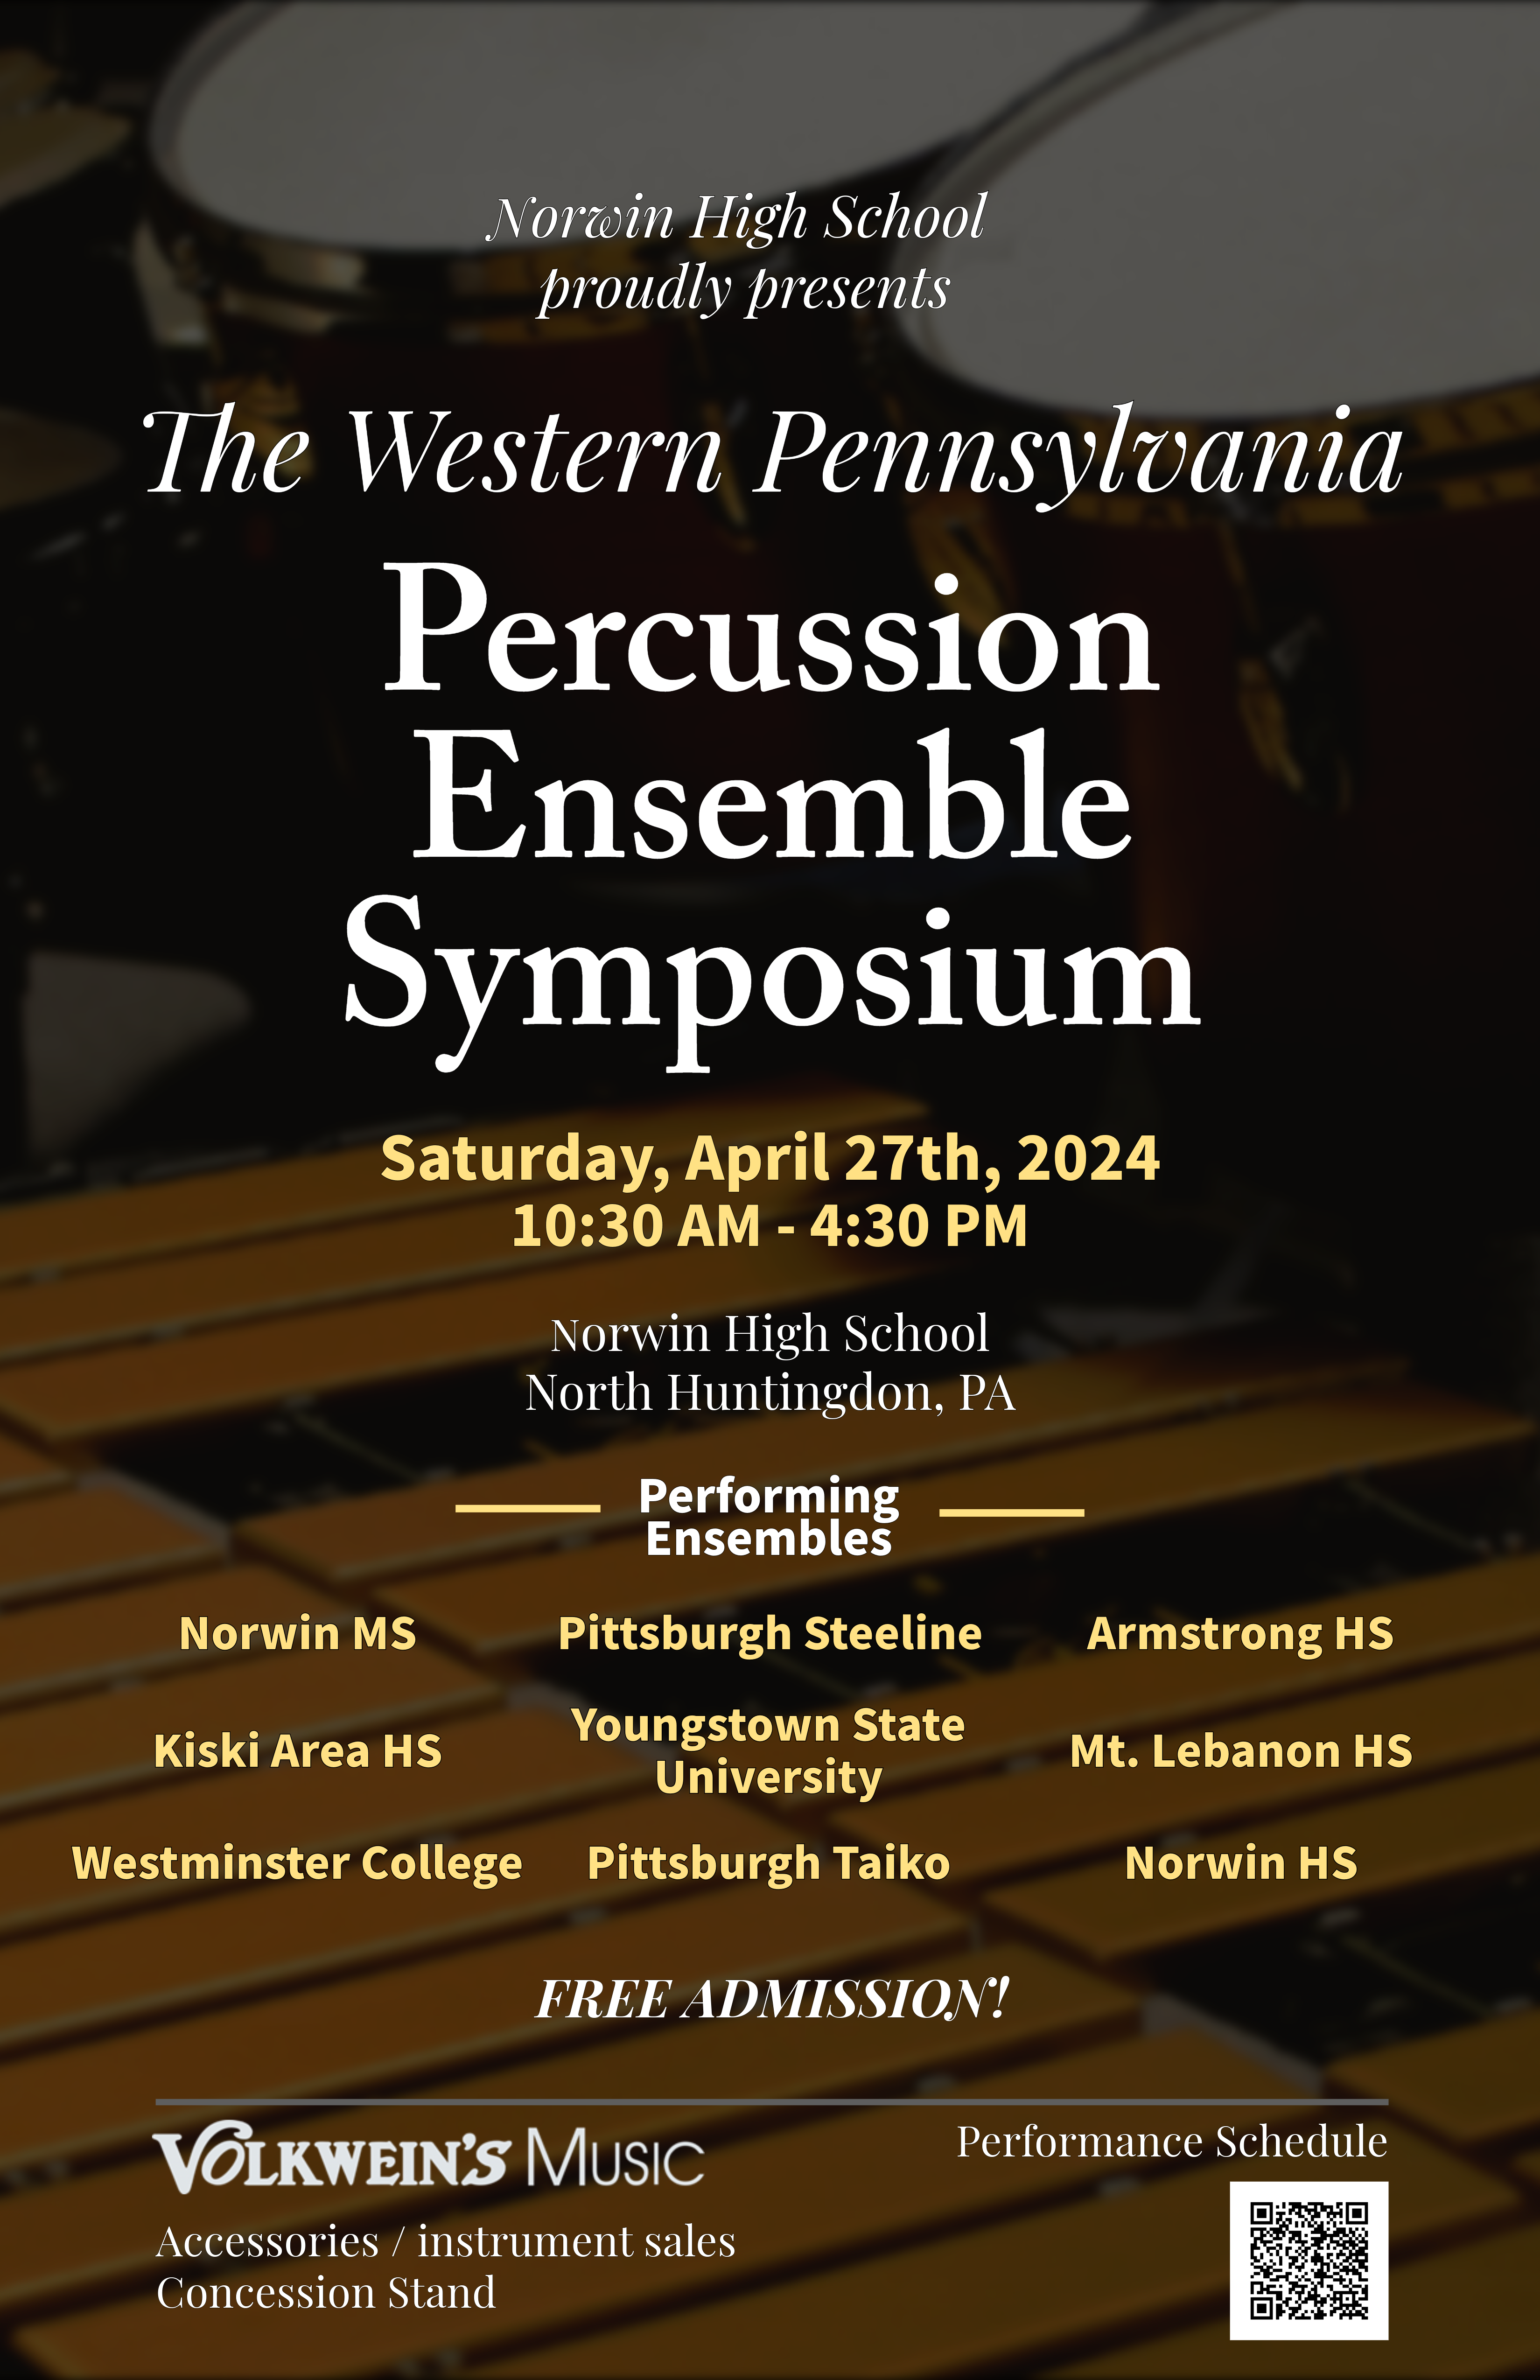 Poster for the Percussion Ensemble Symposium, Saturday April 27, 2024, 10:30 am - 4:30 pm, at Norwin High School, North Huntingdon, PA. 